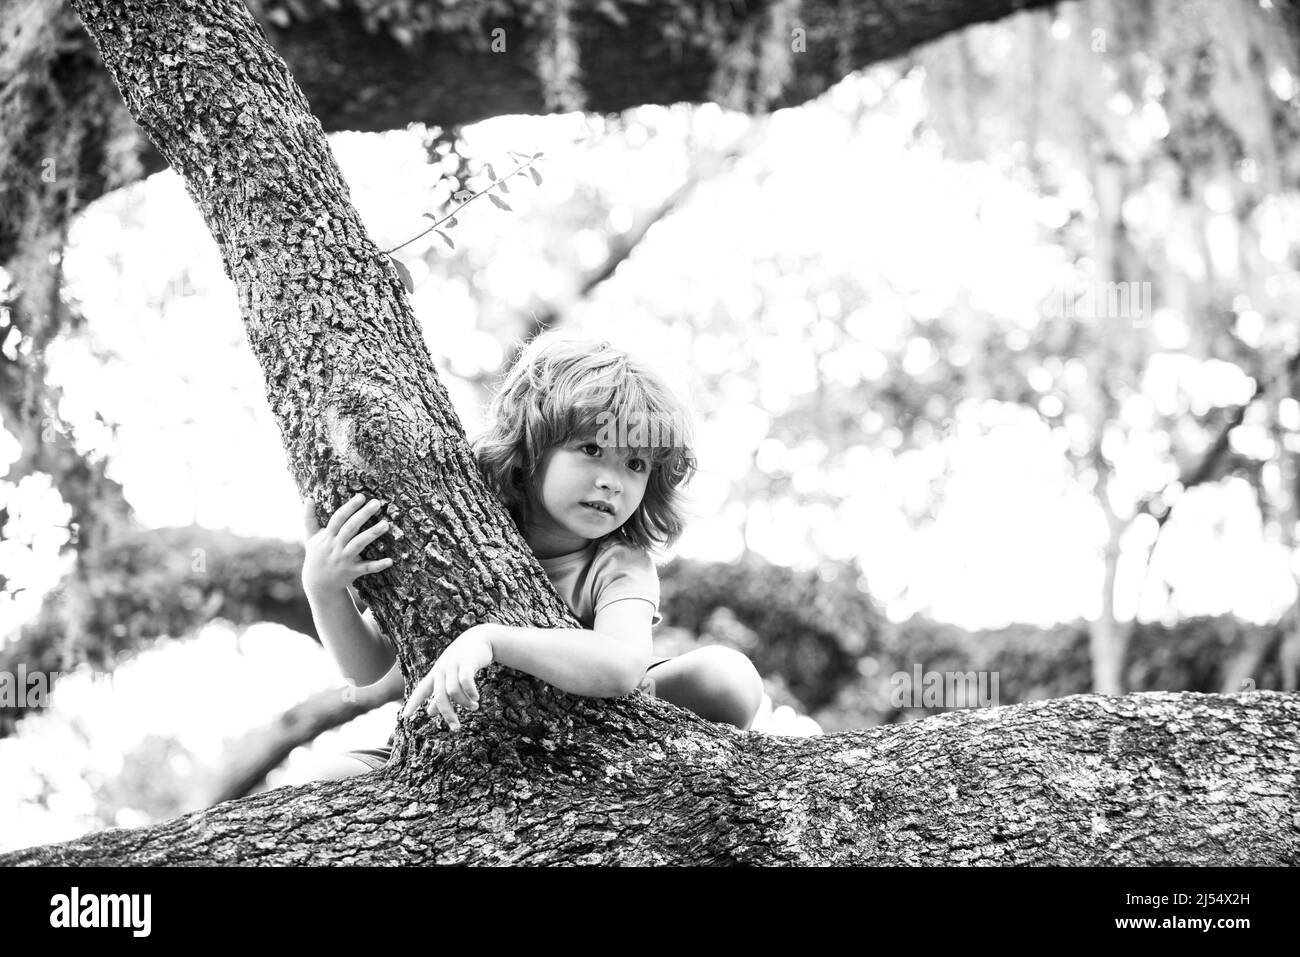 Kids climbing trees. Outdoors portrait of cute preschool boy Child climb a tree. Stock Photo